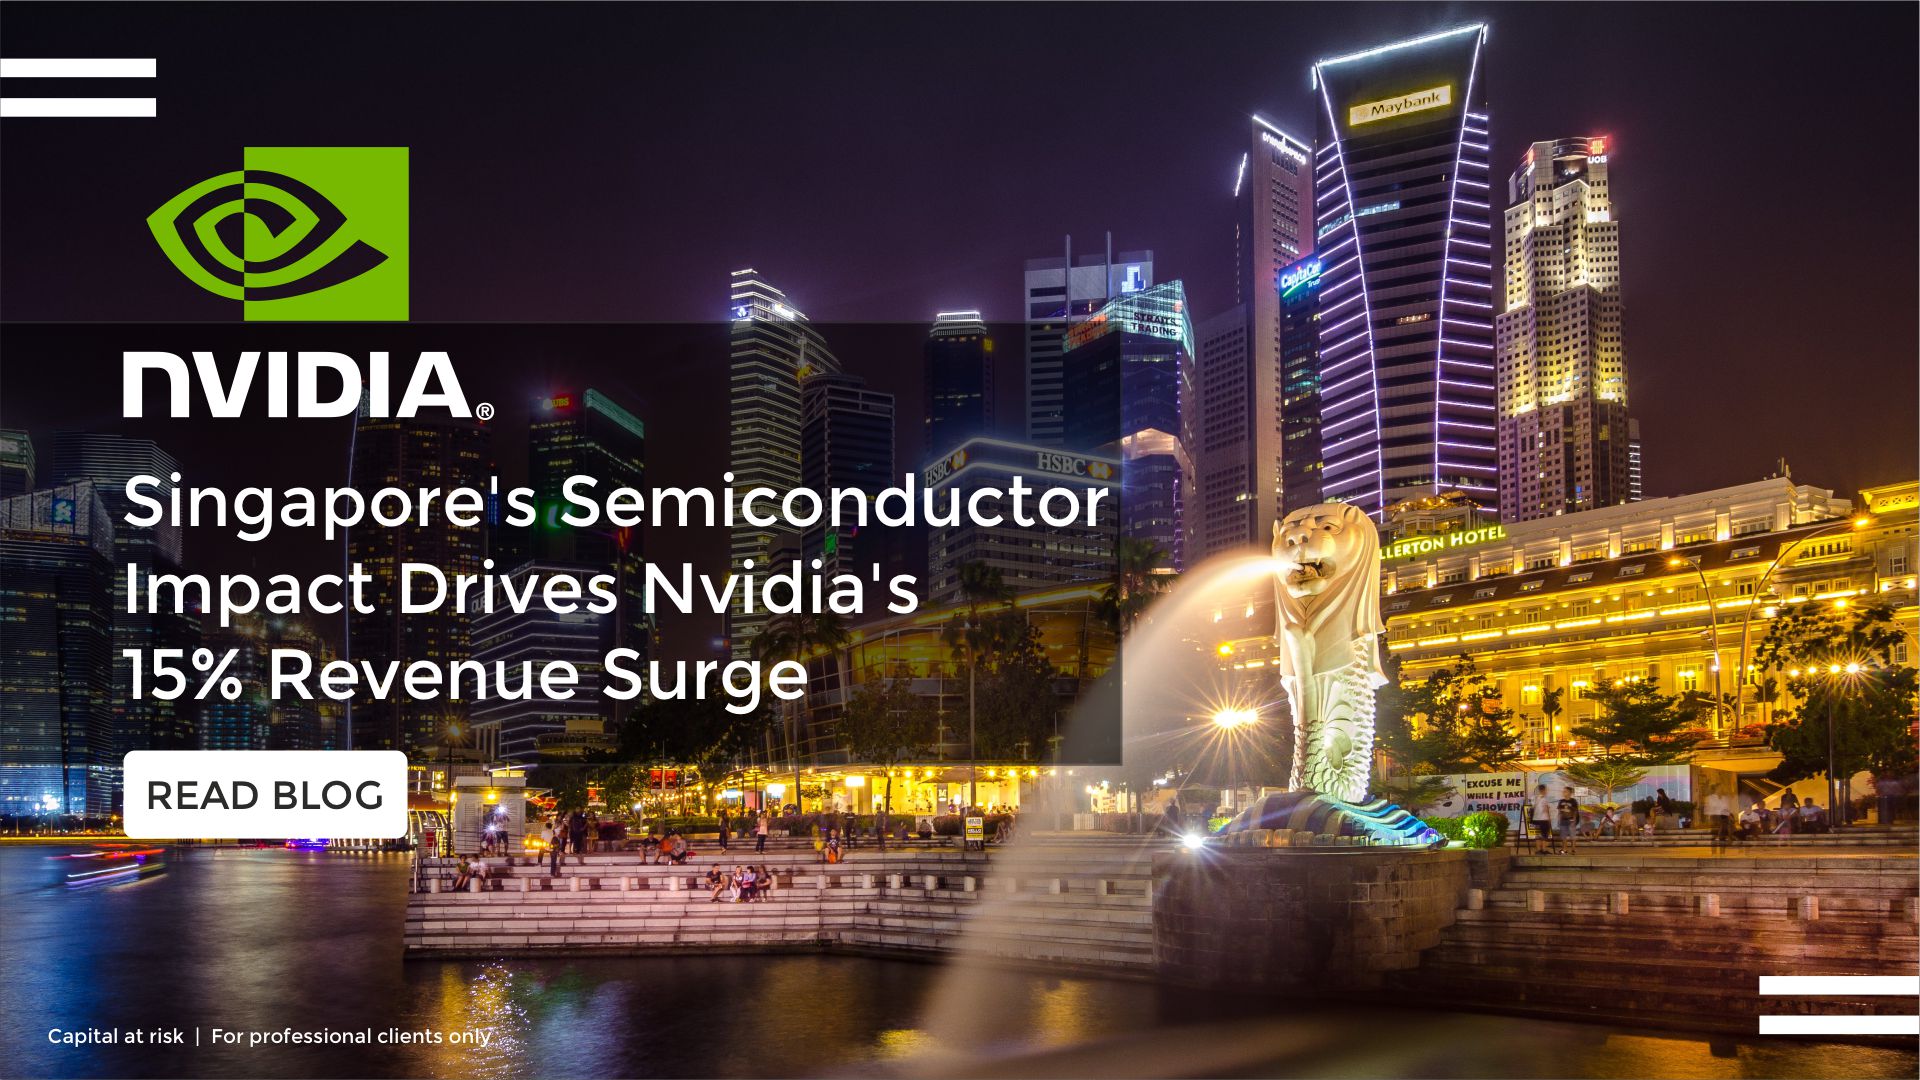 Singapore's Semiconductors Boost Nvidia's Revenue